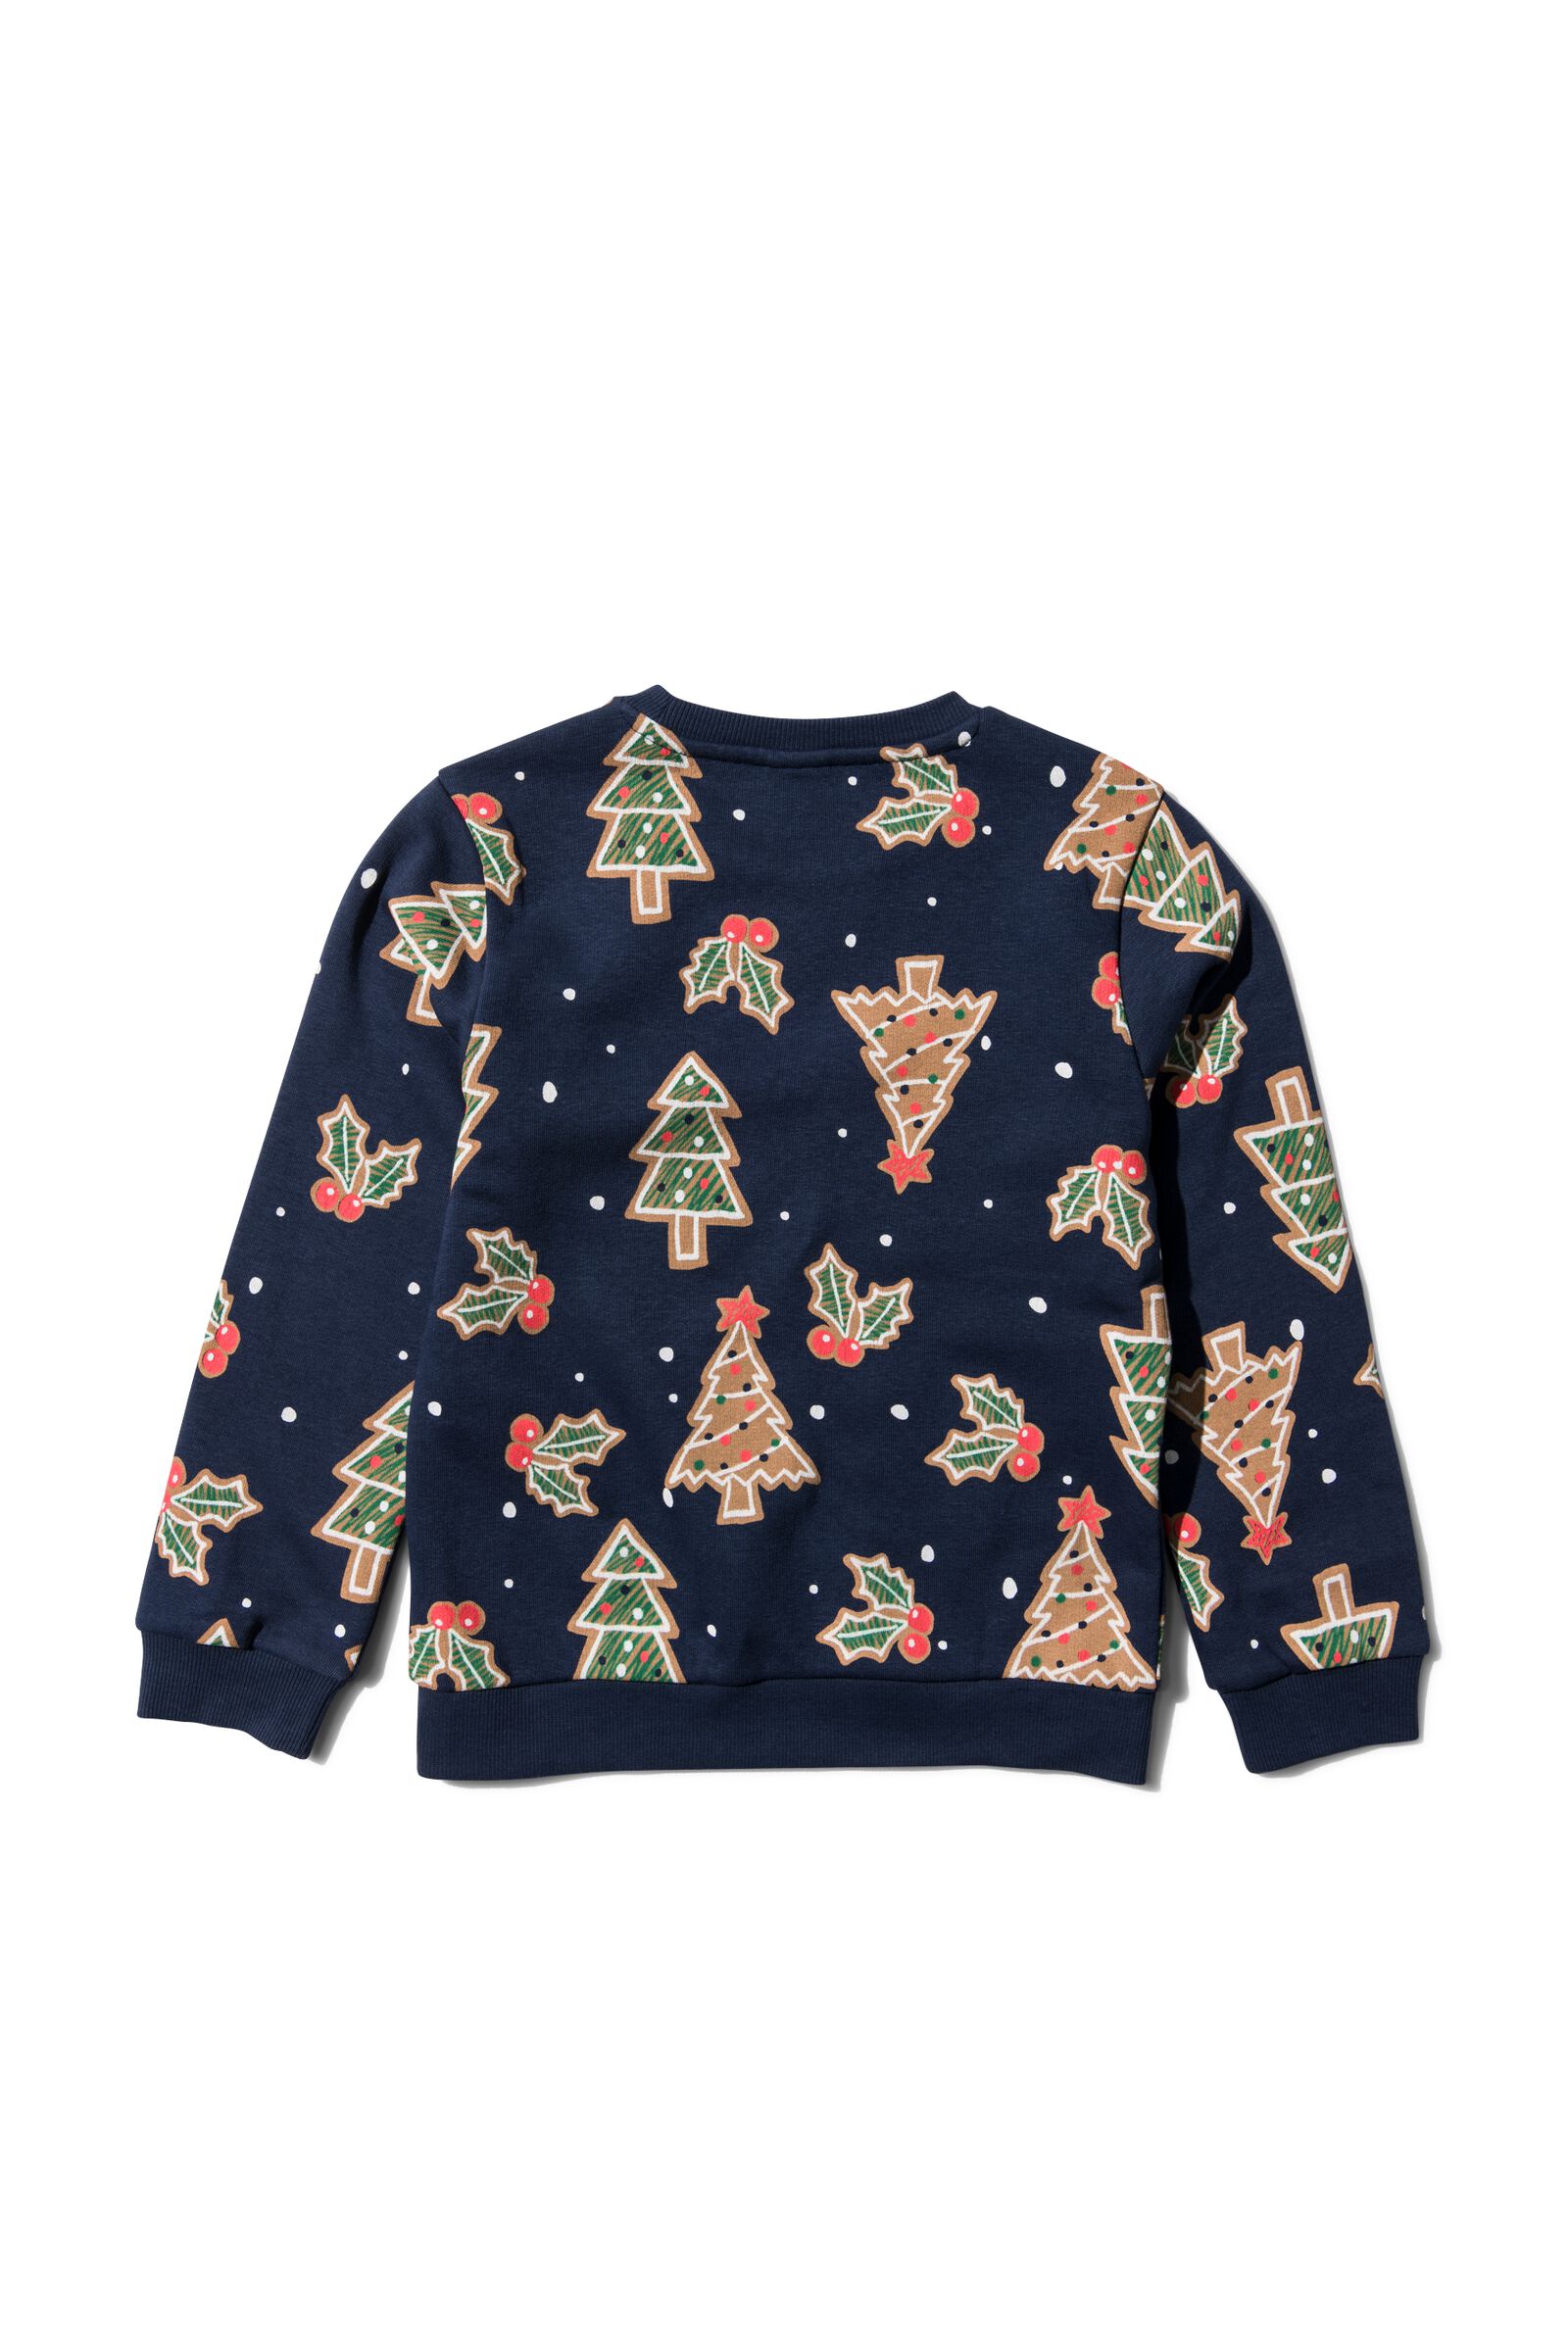 kinder sweater kerstbomen donkerblauw - 1000029536 - HEMA